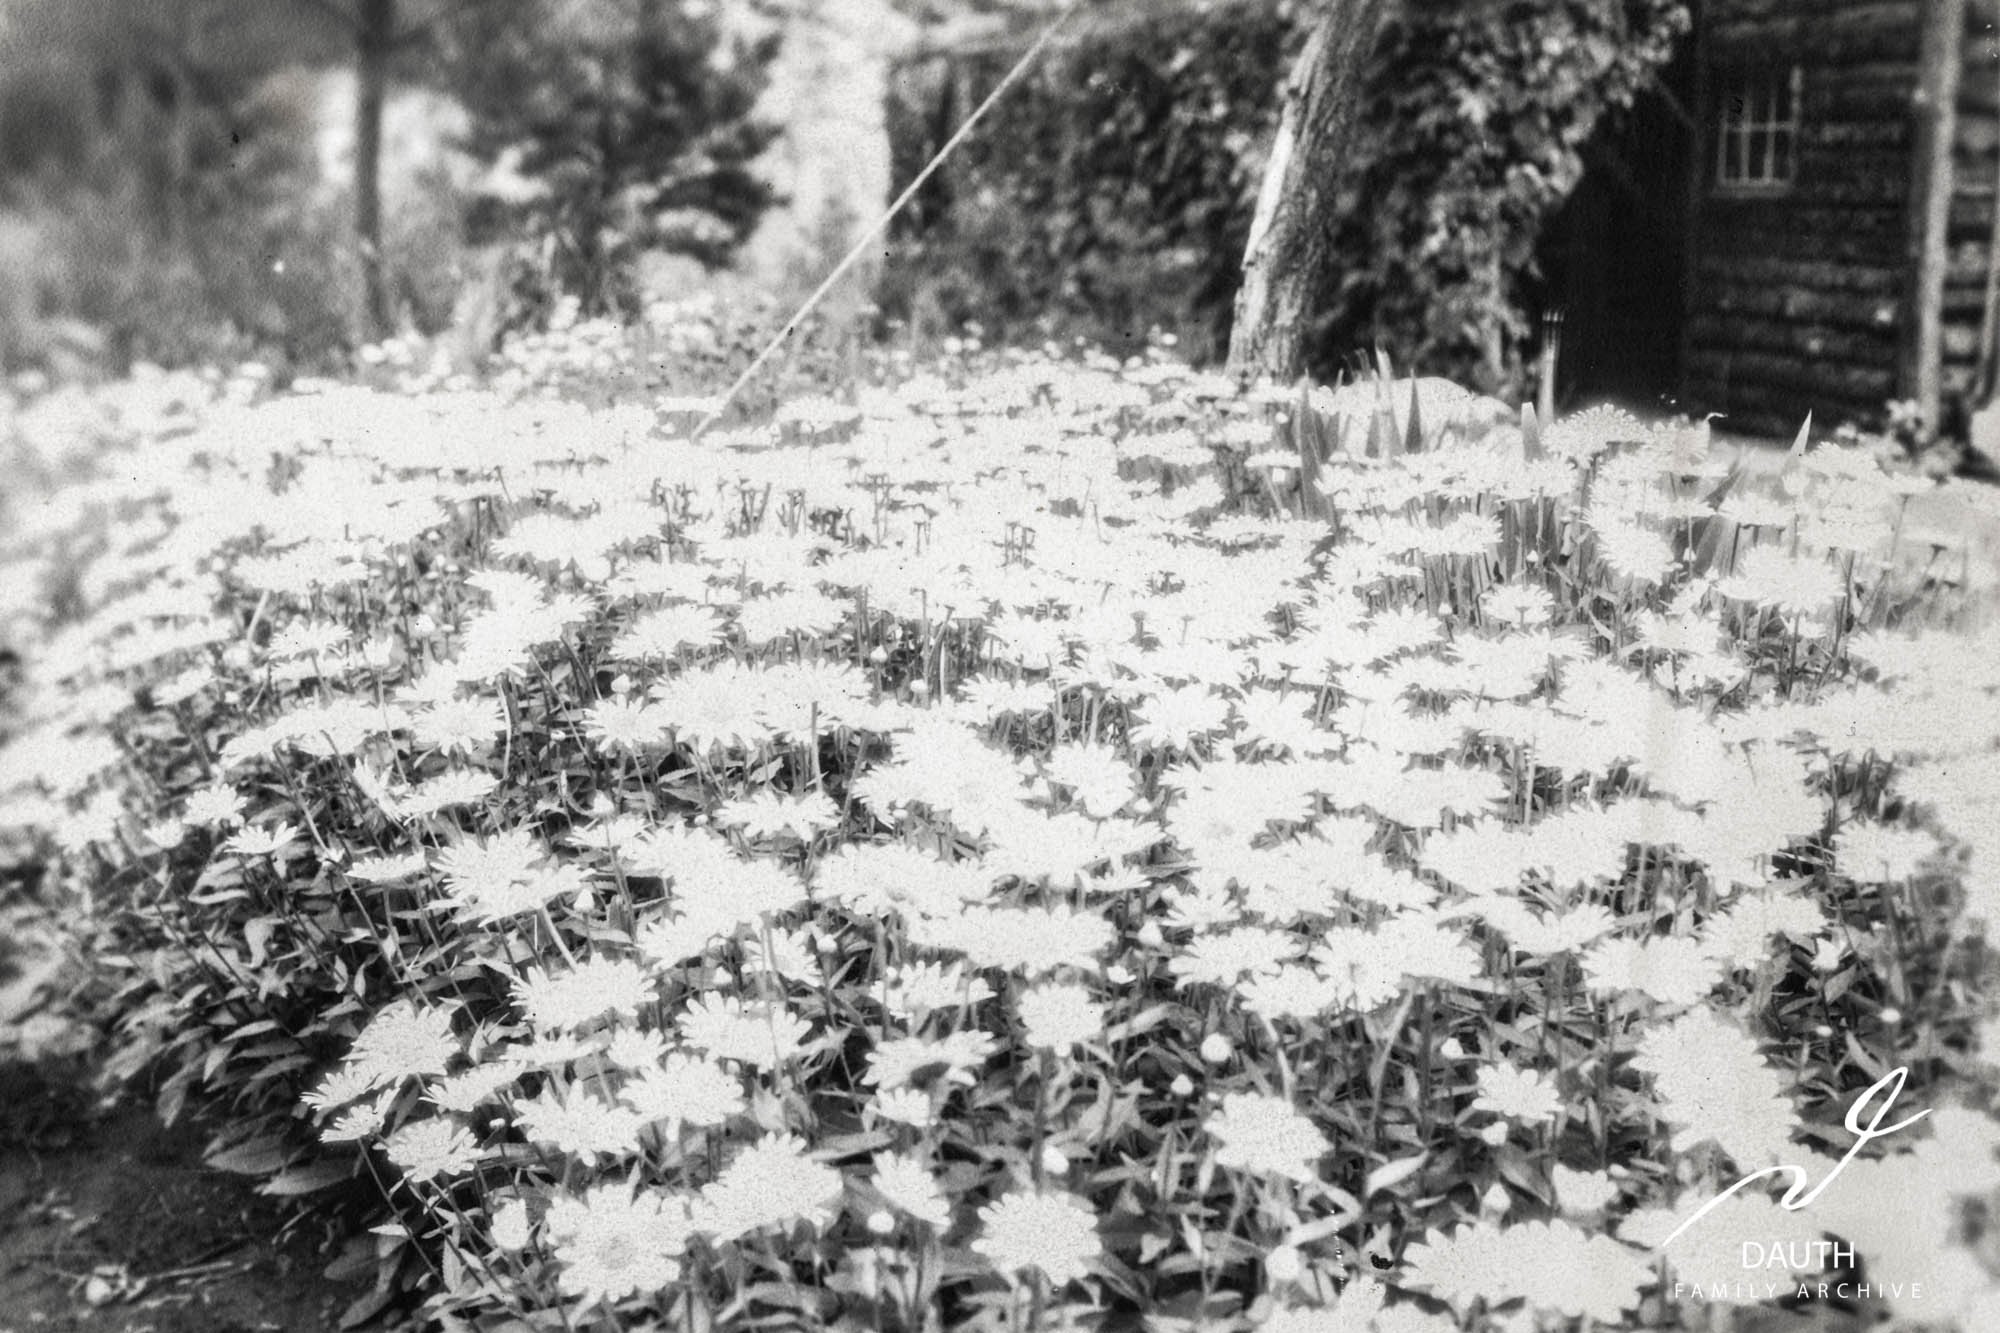 Idlewild Lodge - idlewildlodge.github.io - Circa 1920s - Flowers In Bloom At Idlewild Lodge